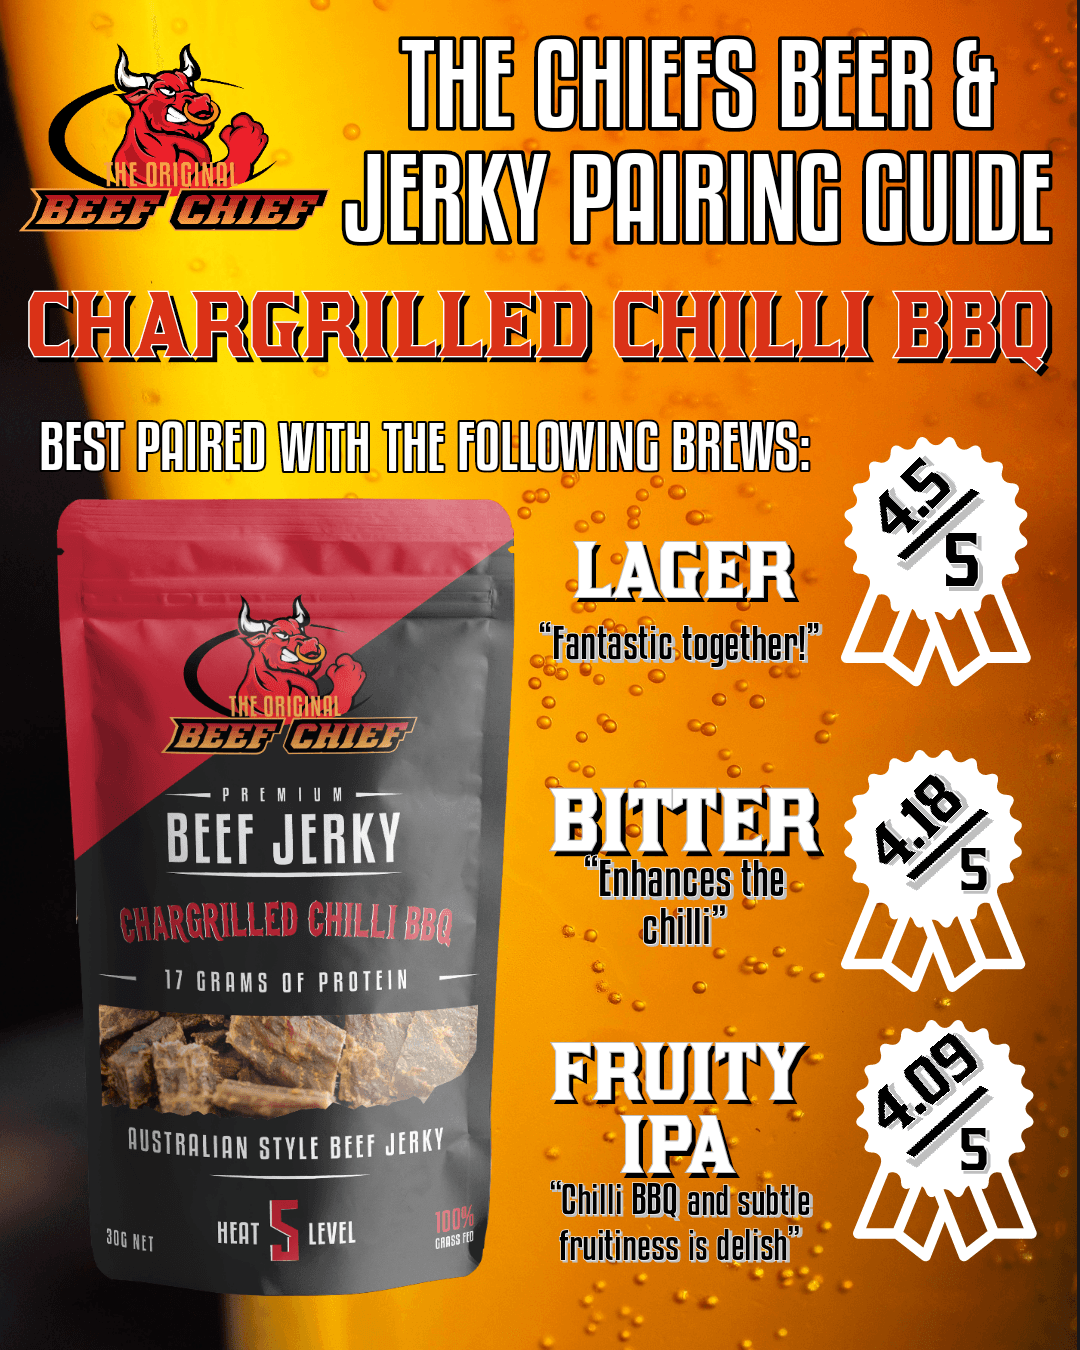 Spicy Beef Jerky Variety Pack - Original Beef Chief